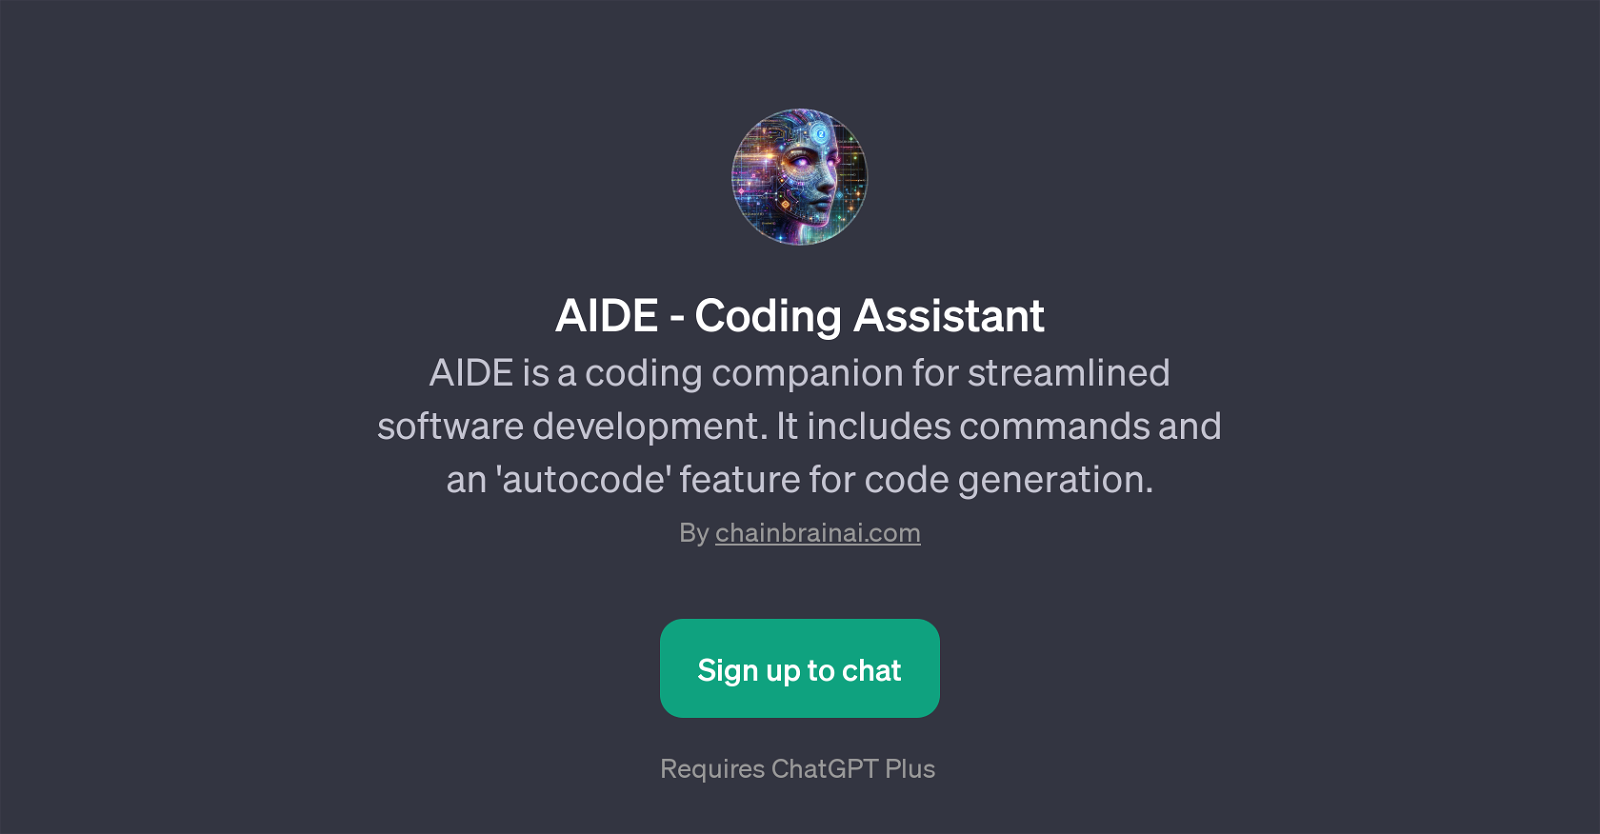 AIDE - Coding Assistant website